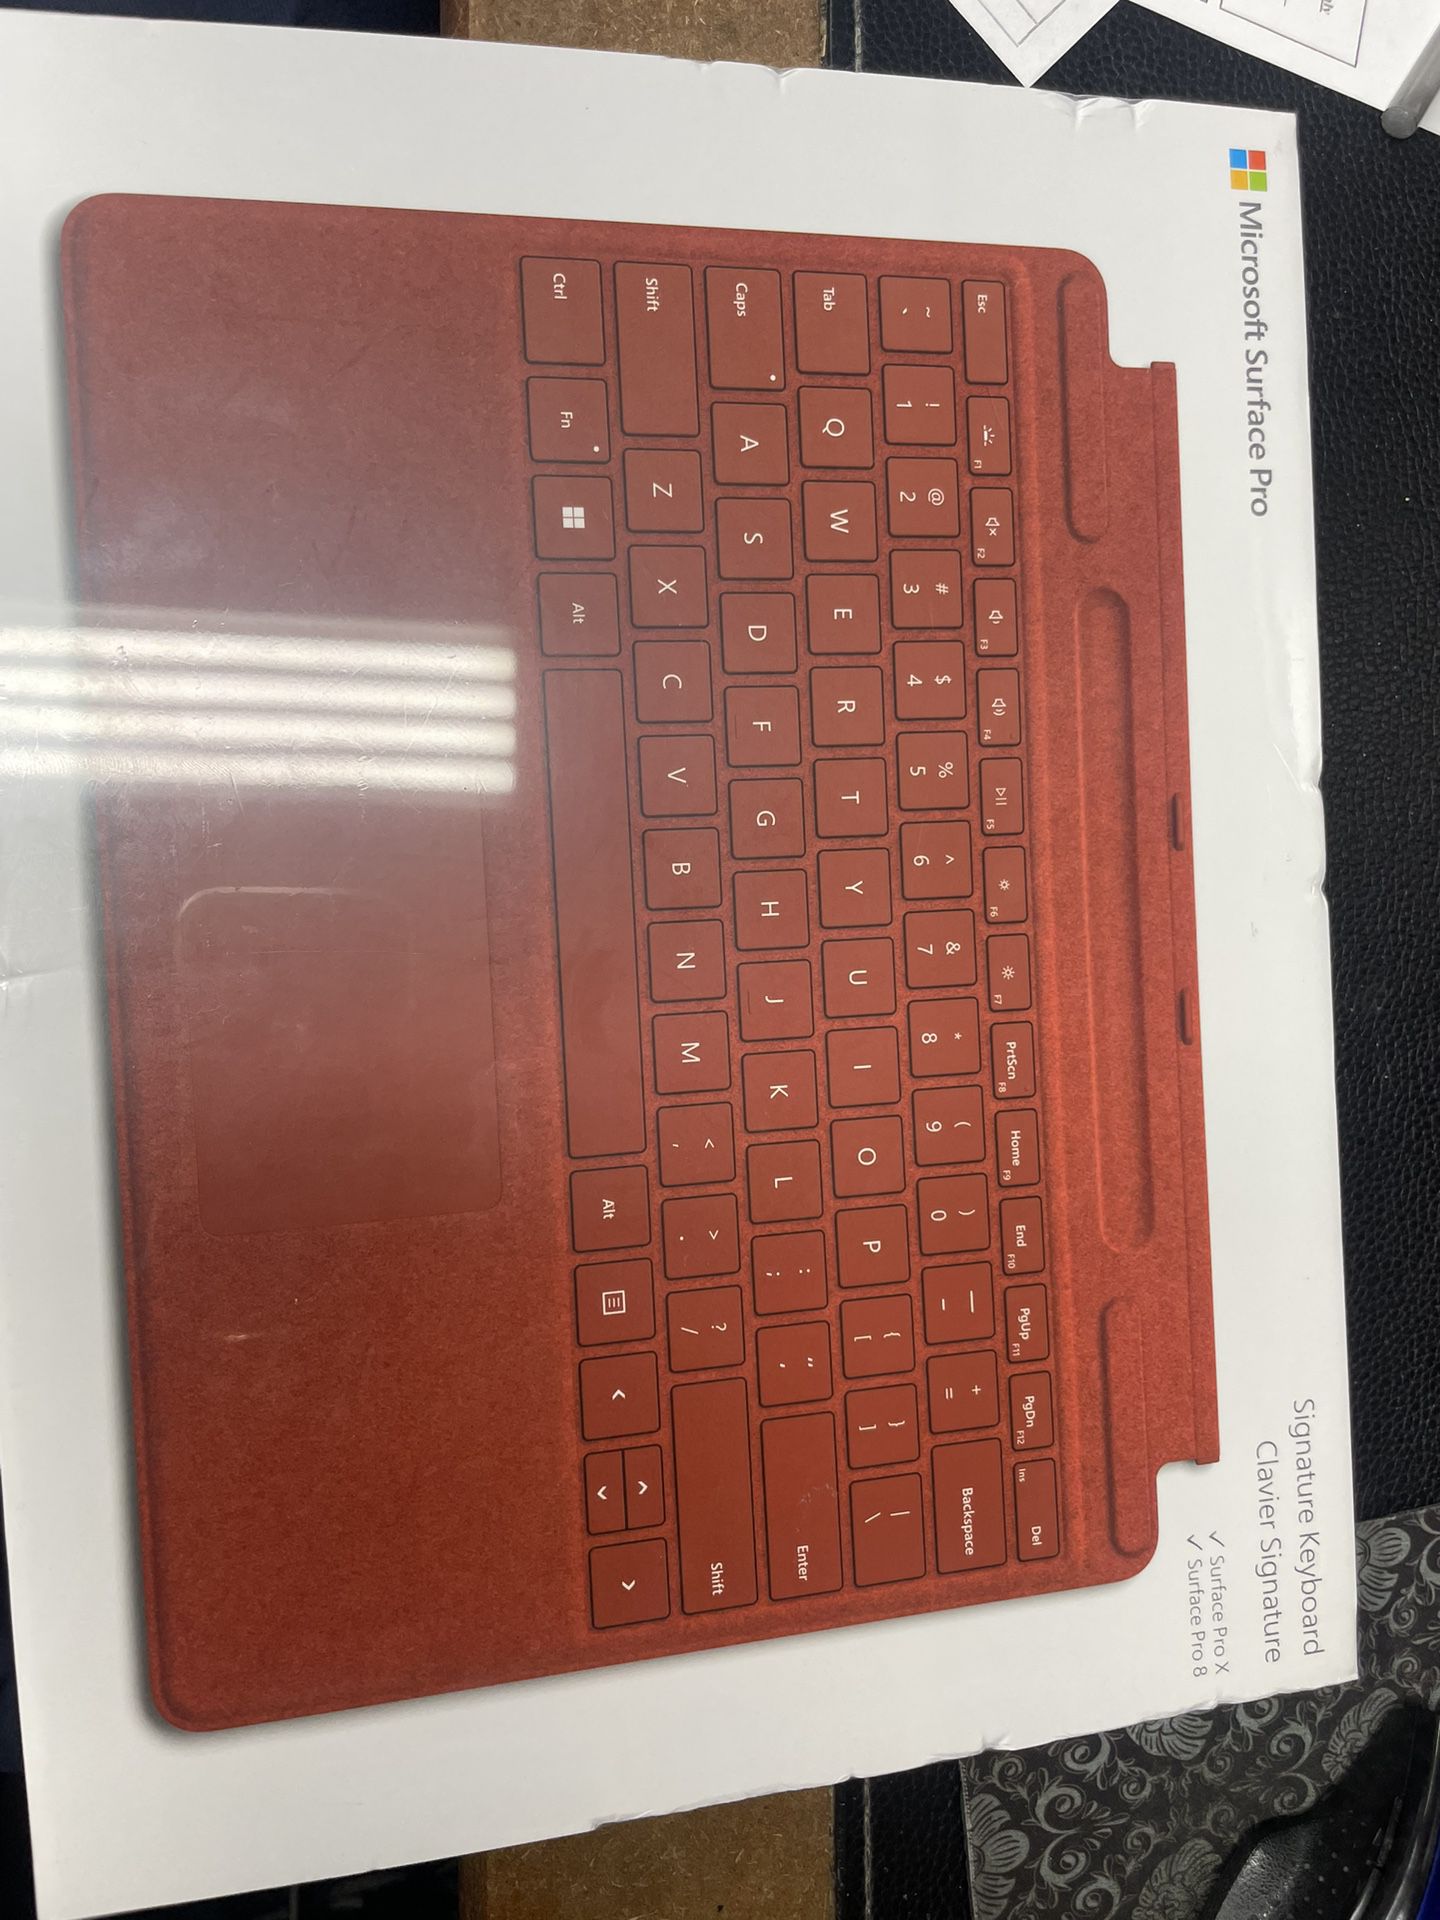 Microsoft Surface Pro Keyboard With Slim Pen2